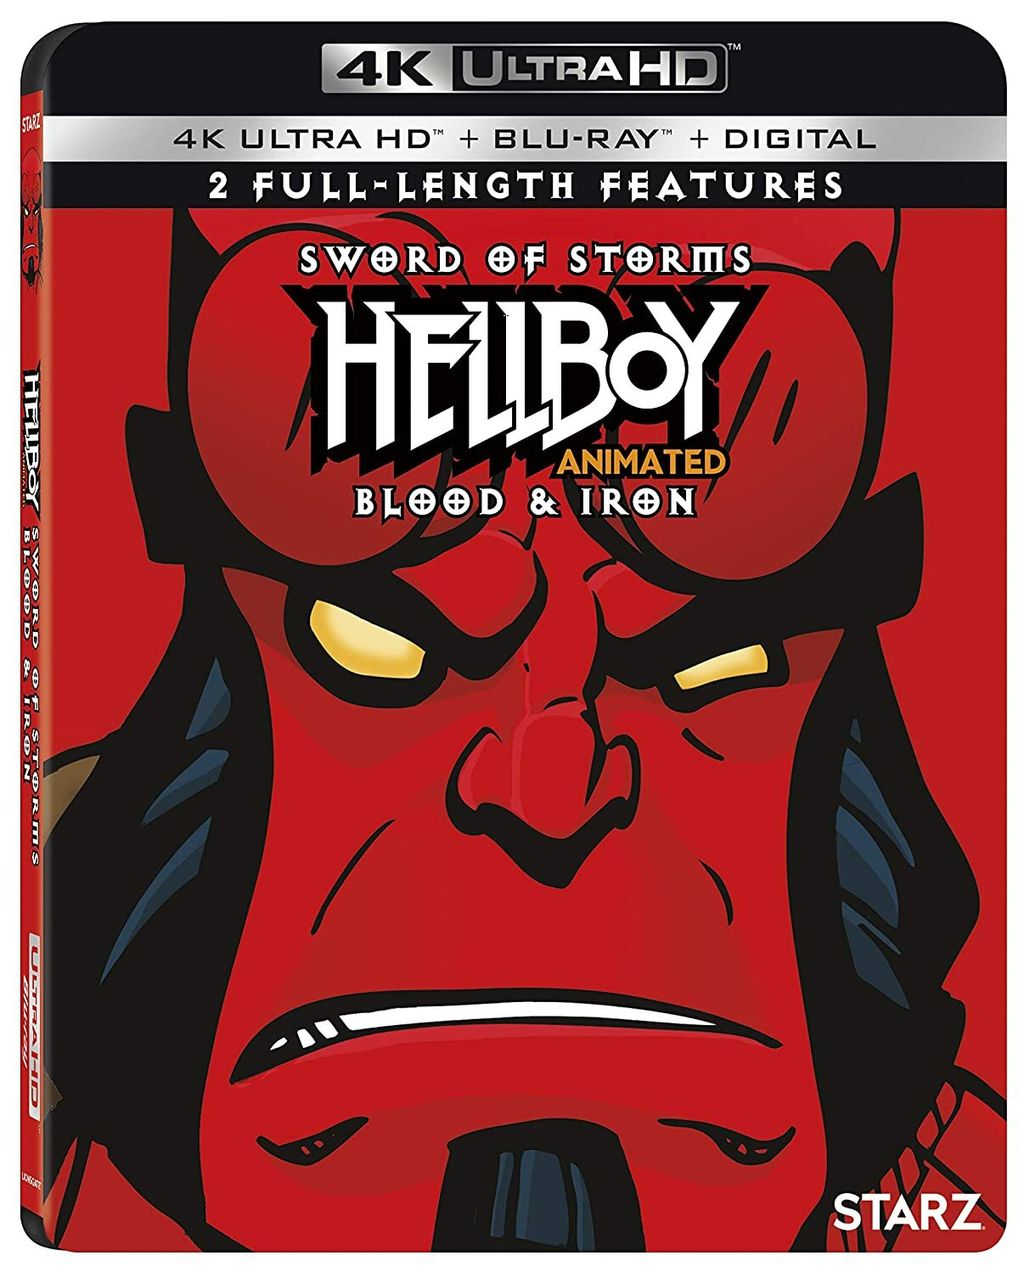 HELLBOY Animated [4k + Blu-ray + Digital] bluray.jpg